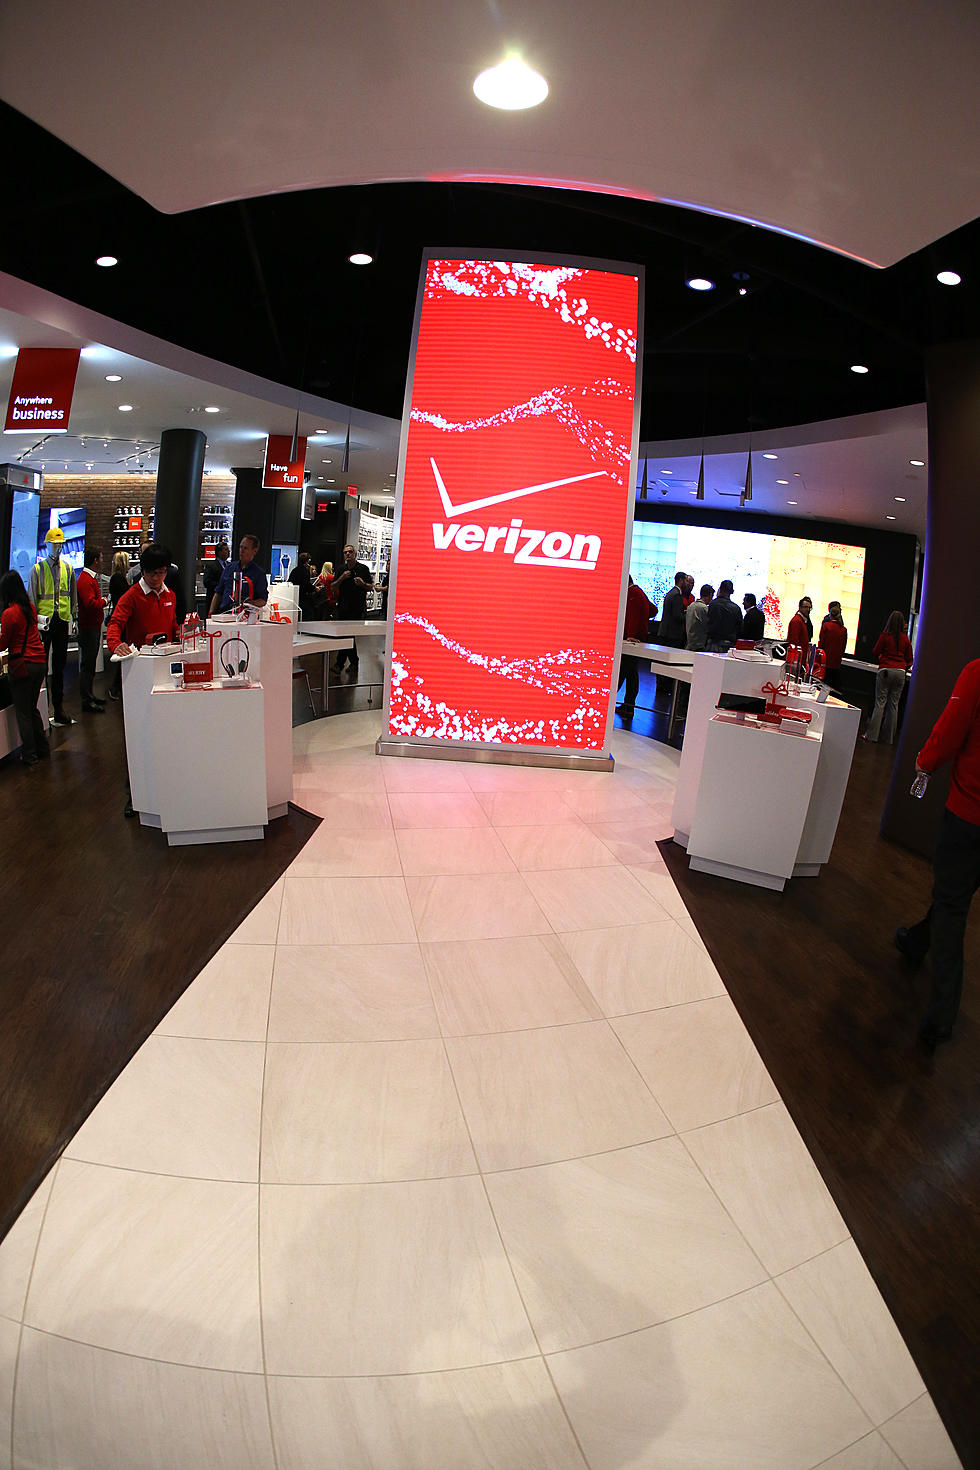 Verizon to Add Jobs in Michigan